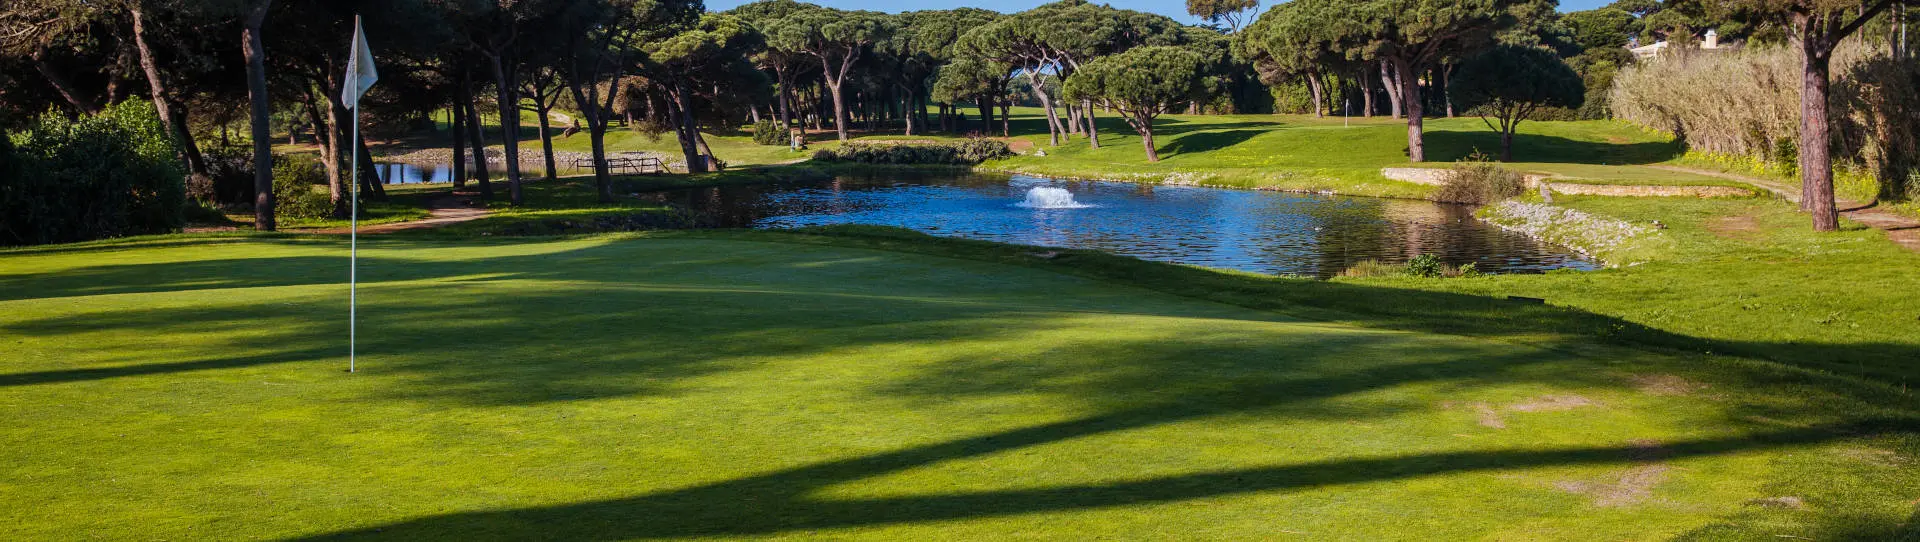 Portugal Golf Driving Range - Onyria Quinta da Marinha Golf Resort - Photo 2